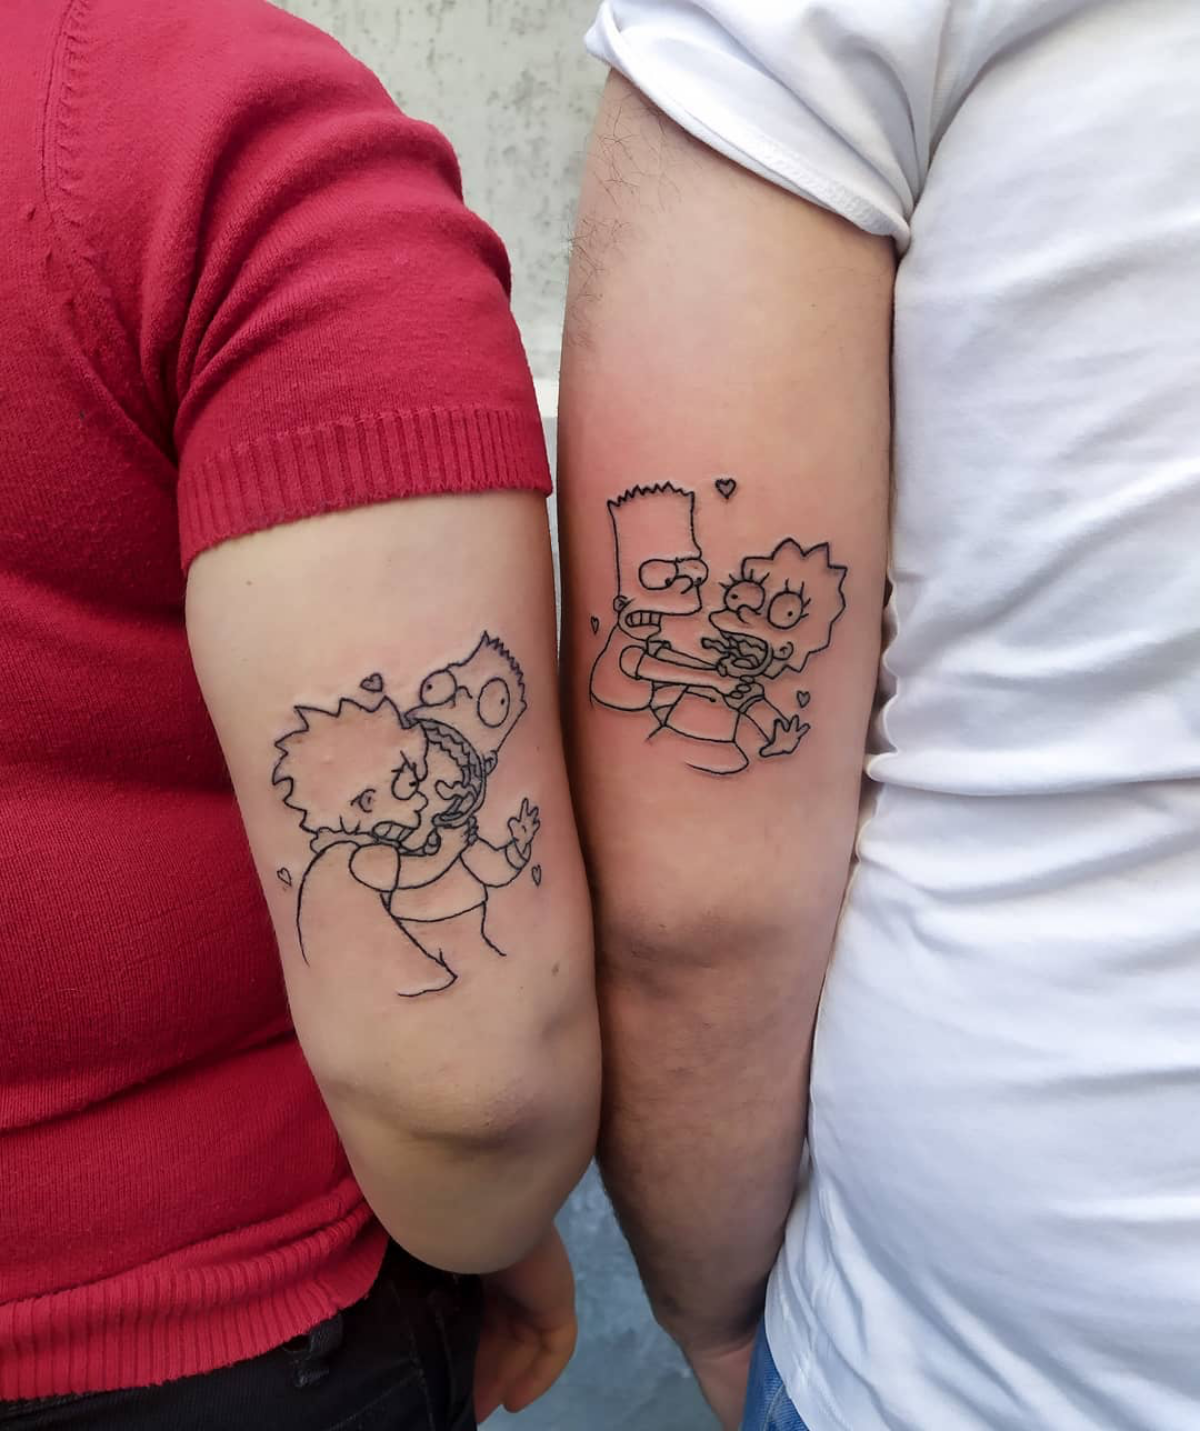 lisa and bart sibling tattoo